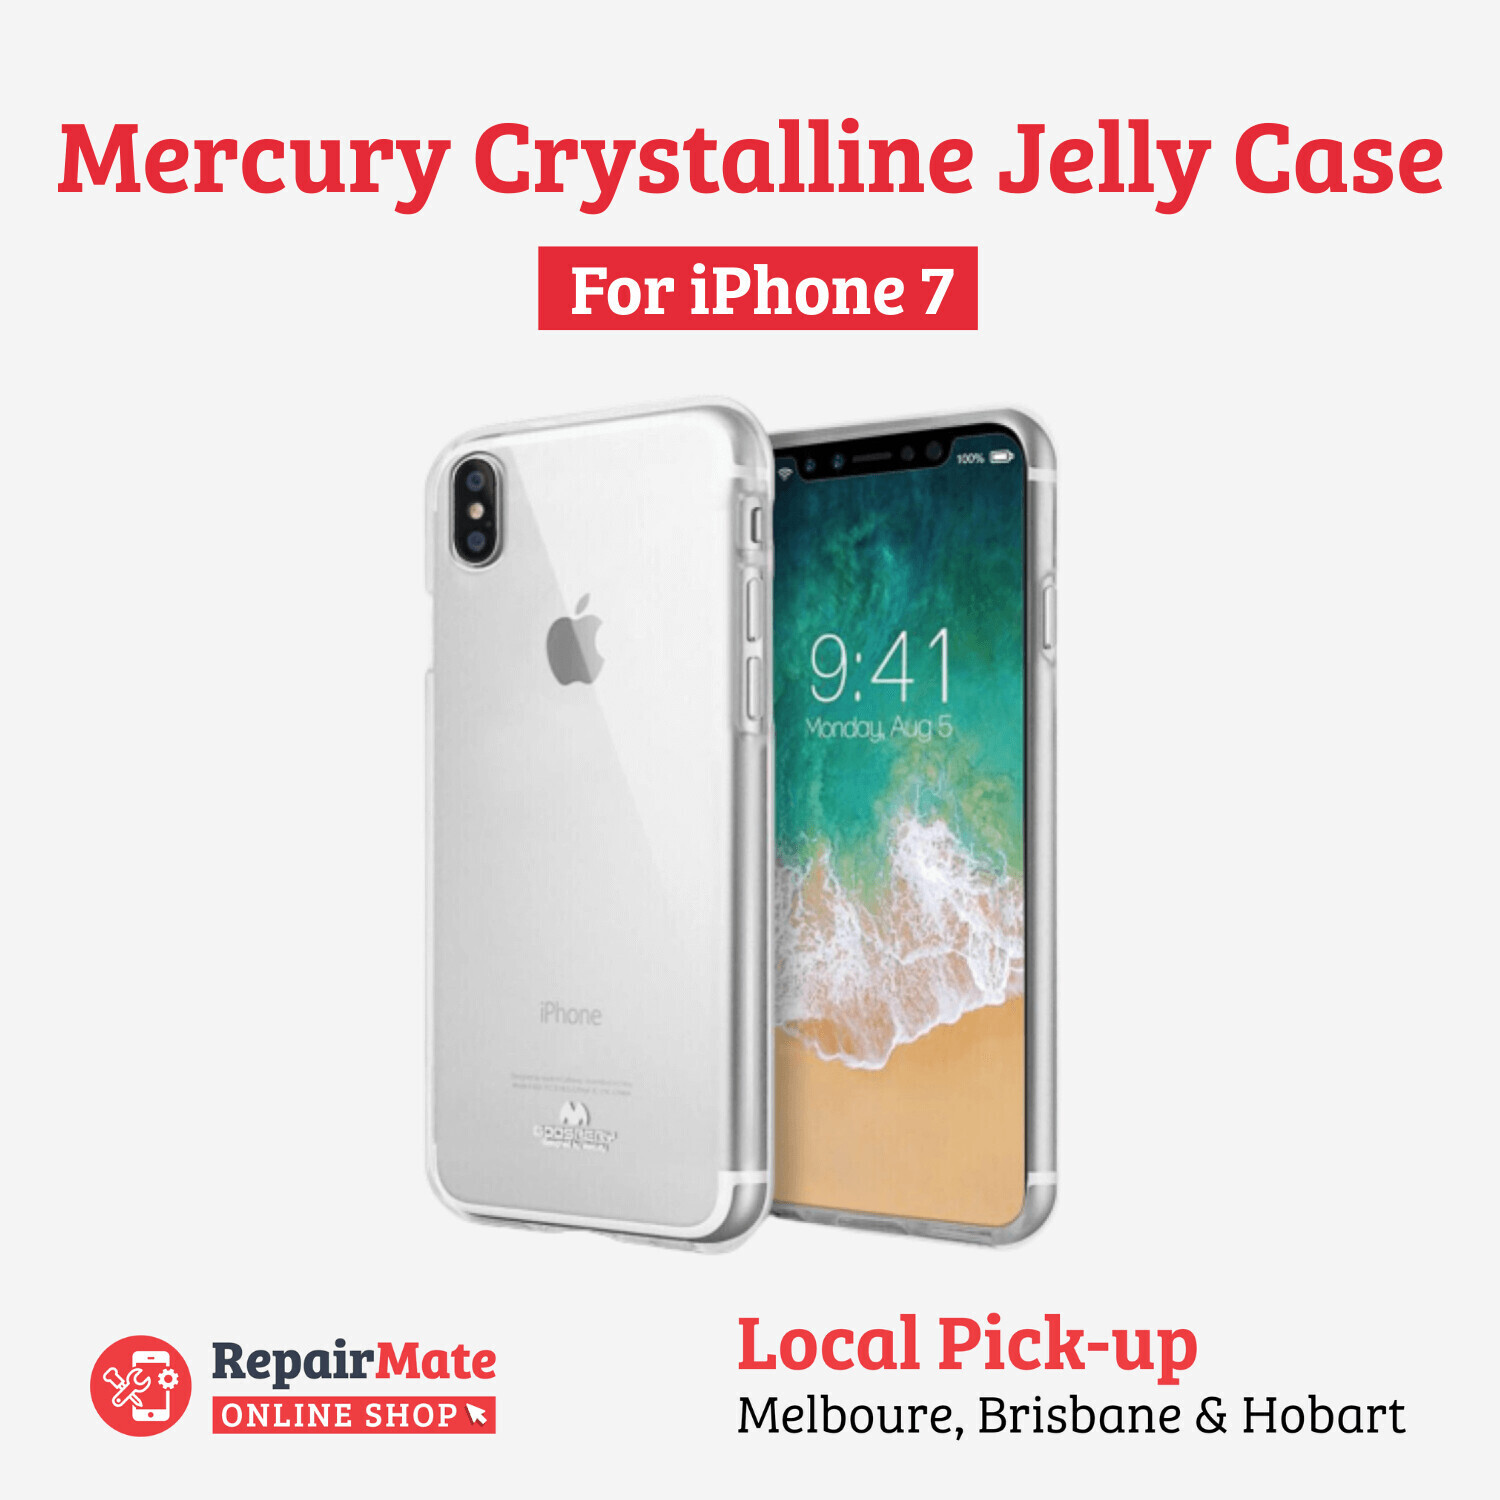 iPhone 7 Mercury Crystalline Jelly Case Cover